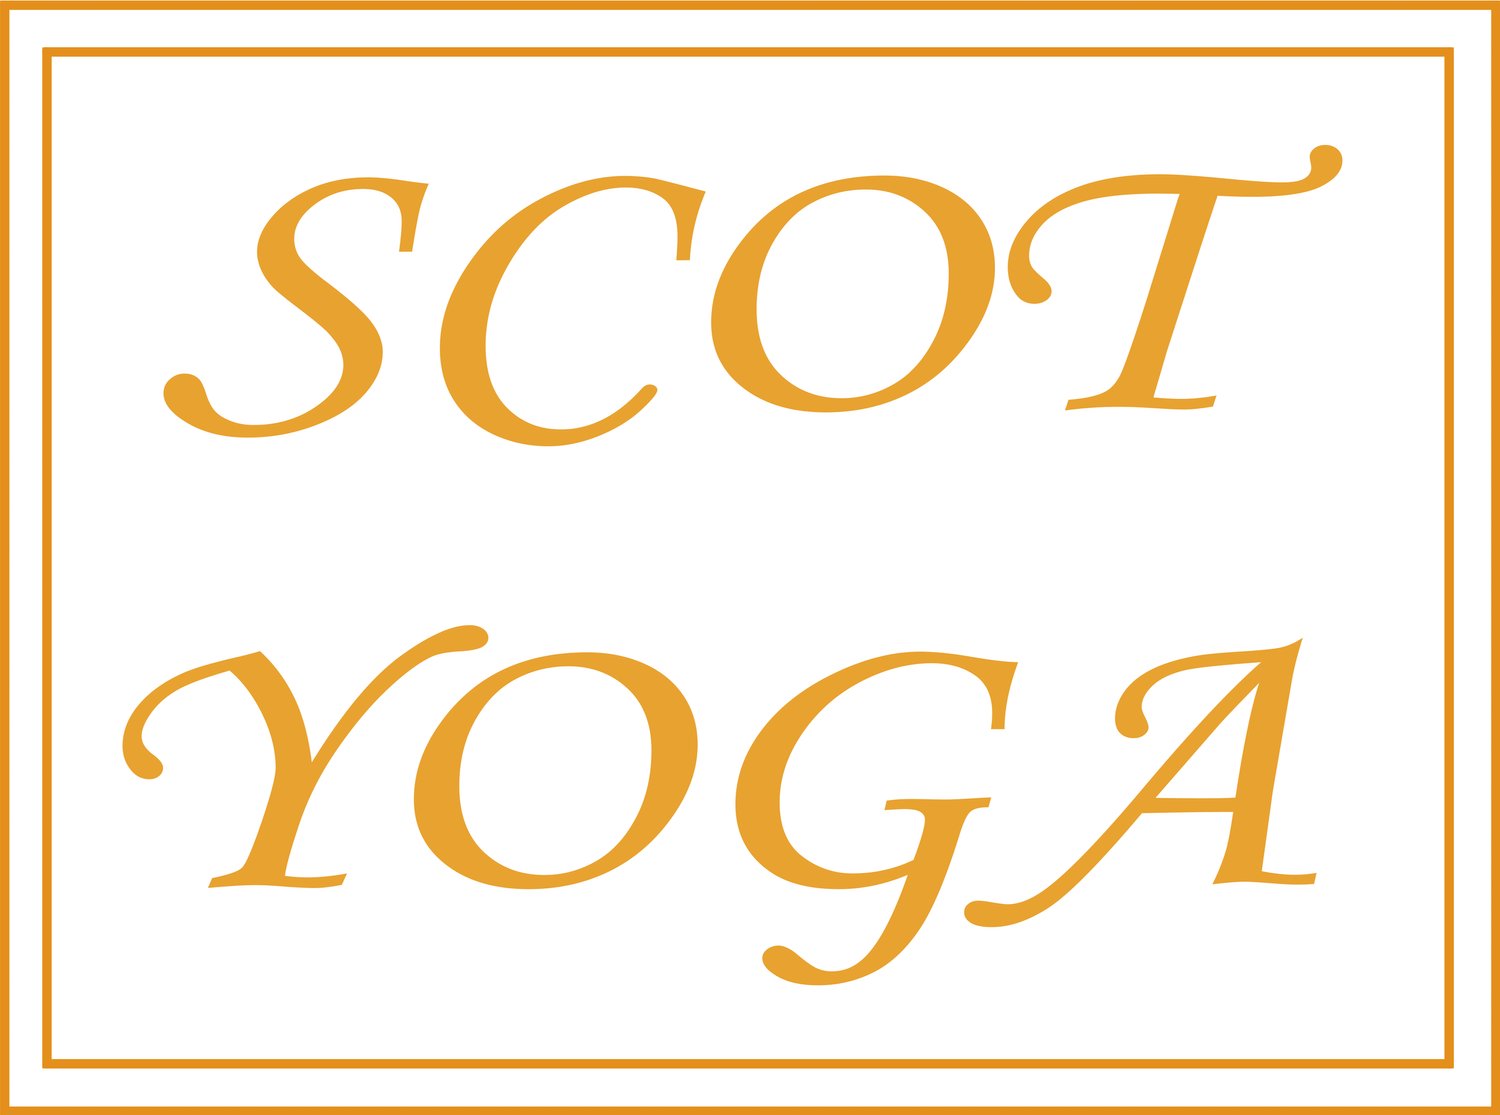 Scot Yoga